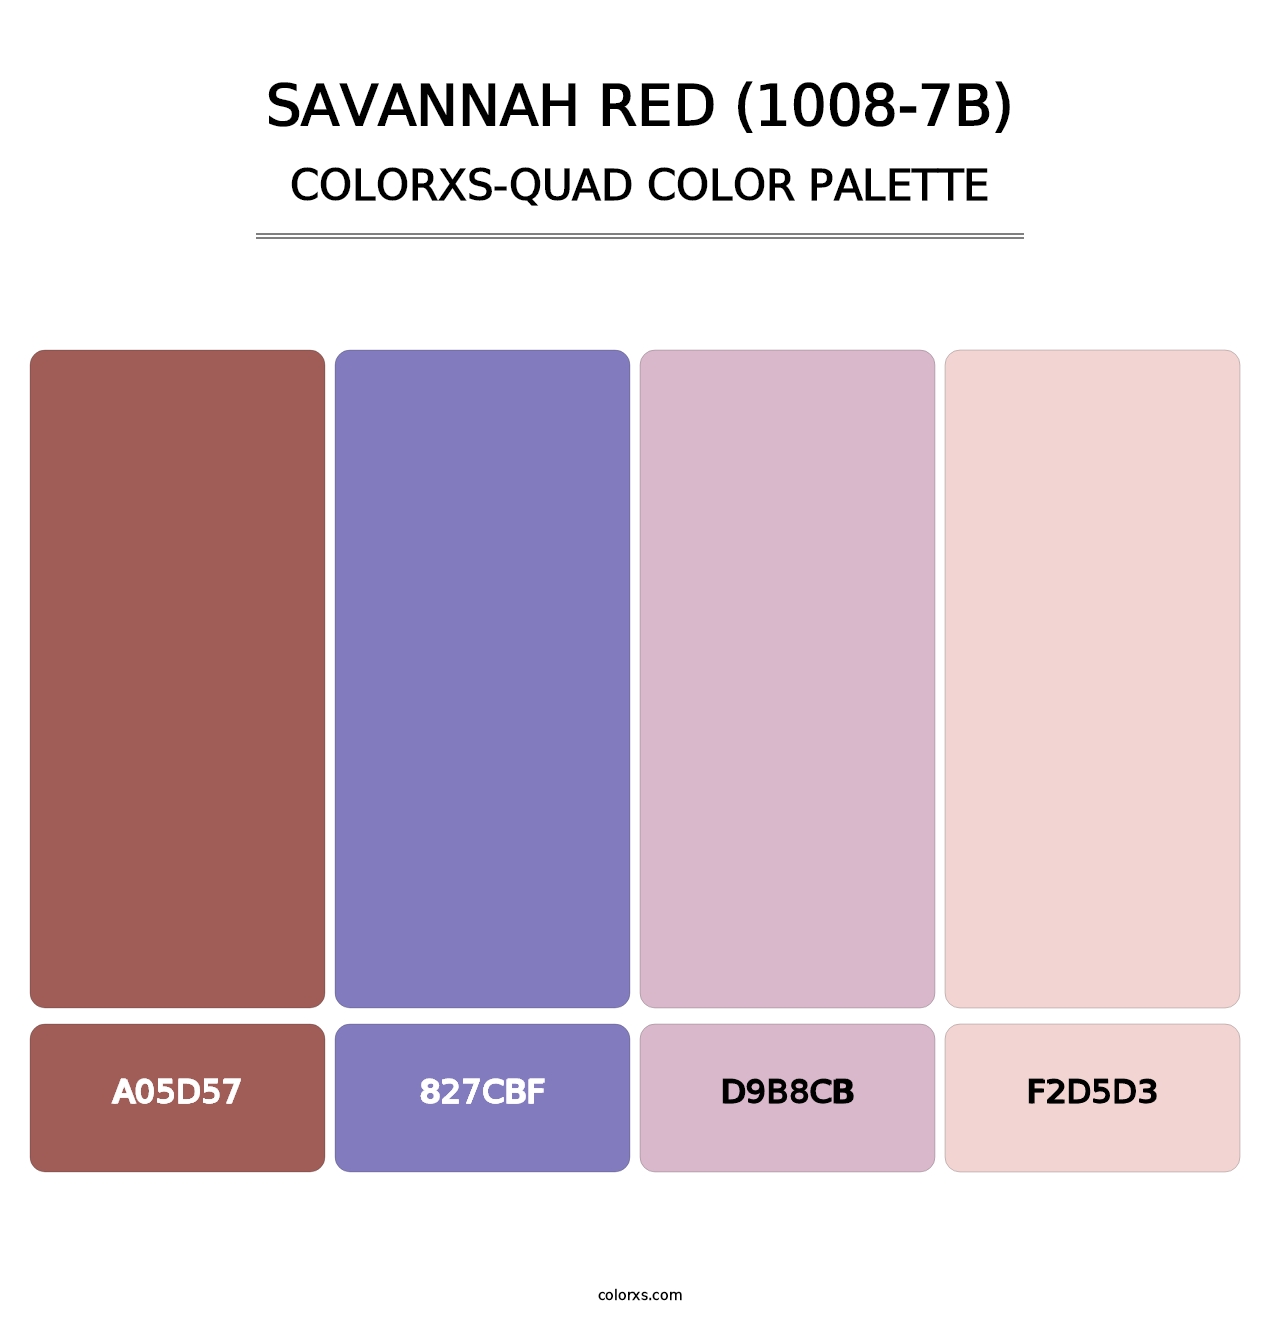 Savannah Red (1008-7B) - Colorxs Quad Palette